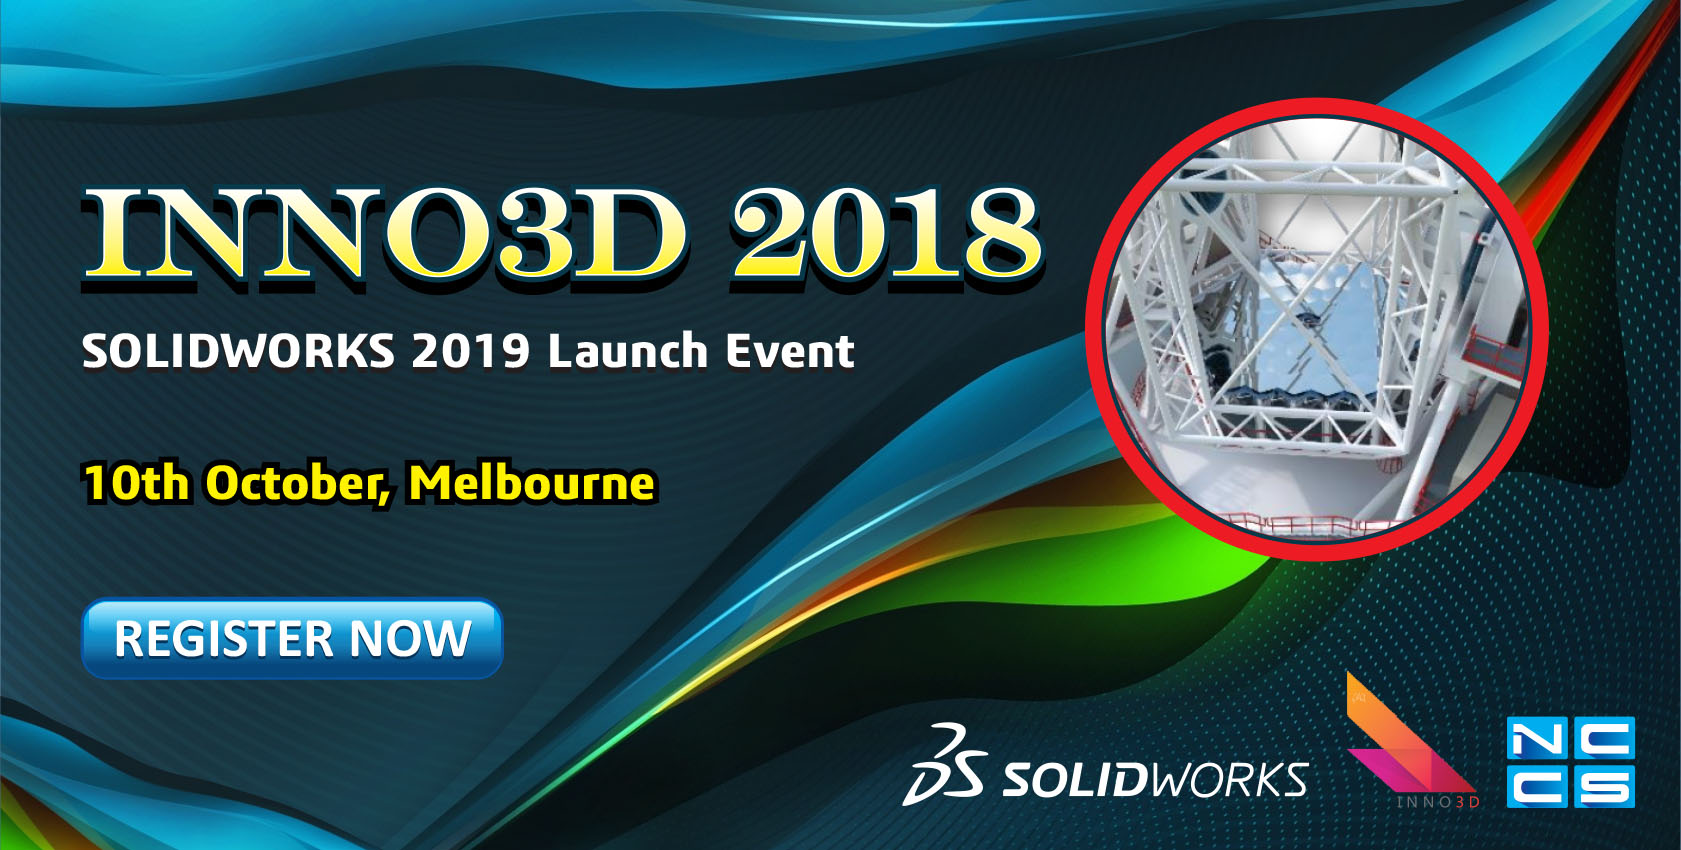 INNO3D 2018|Innovation Redefined| SOLIDWORKS 2019, Melbourne, Victoria, Australia